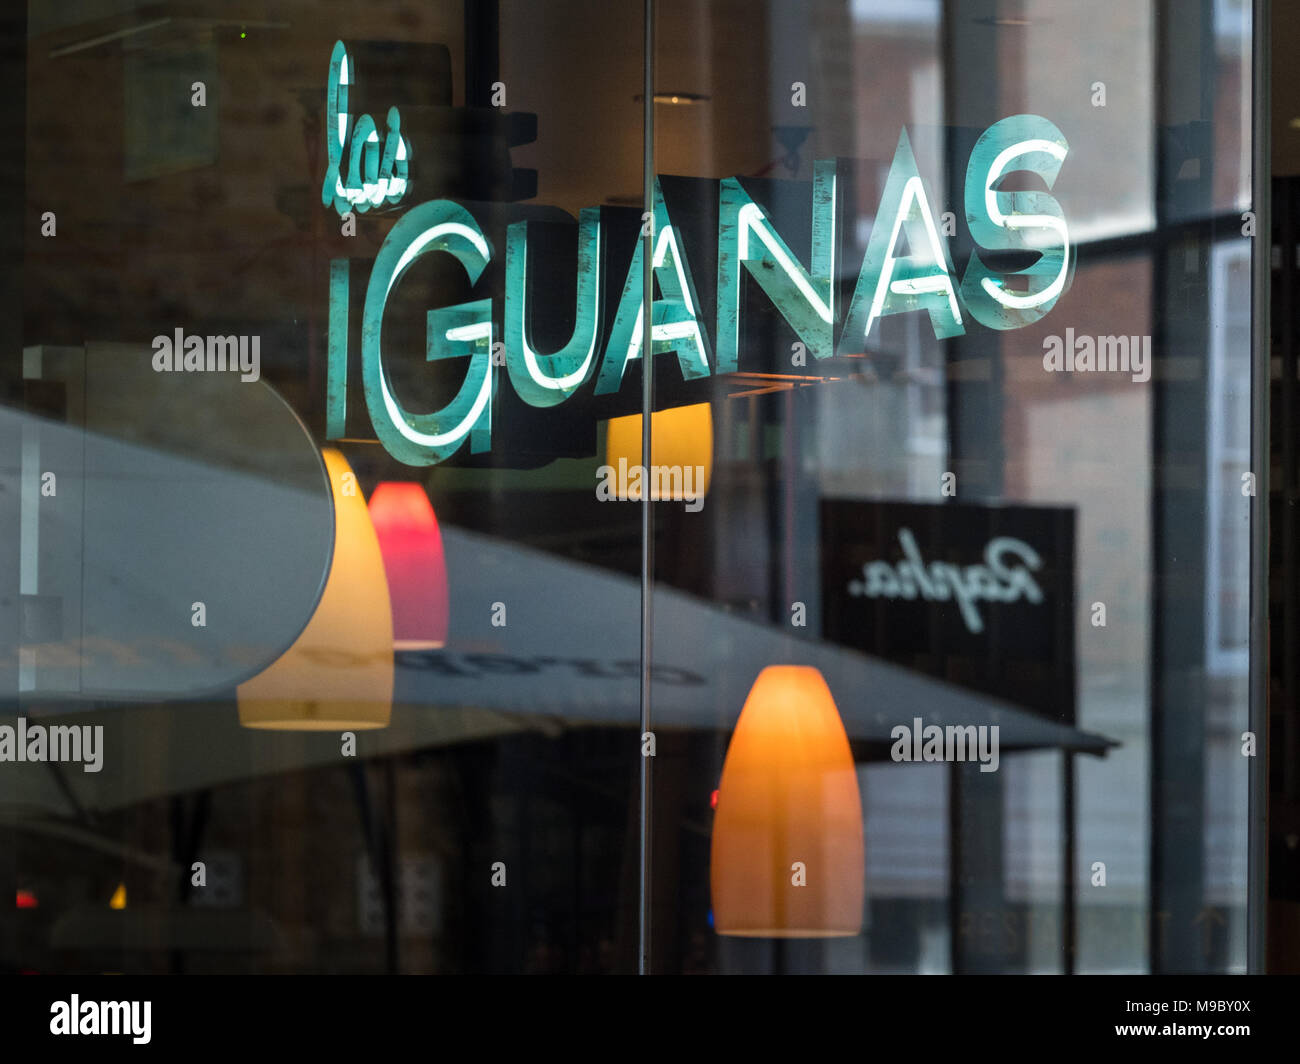 Las Iguanas Restaurant in Spitalfields Market, Shoreditch, London. Las Iguanas ist ein Latin American Style food chain Restaurant. Stockfoto